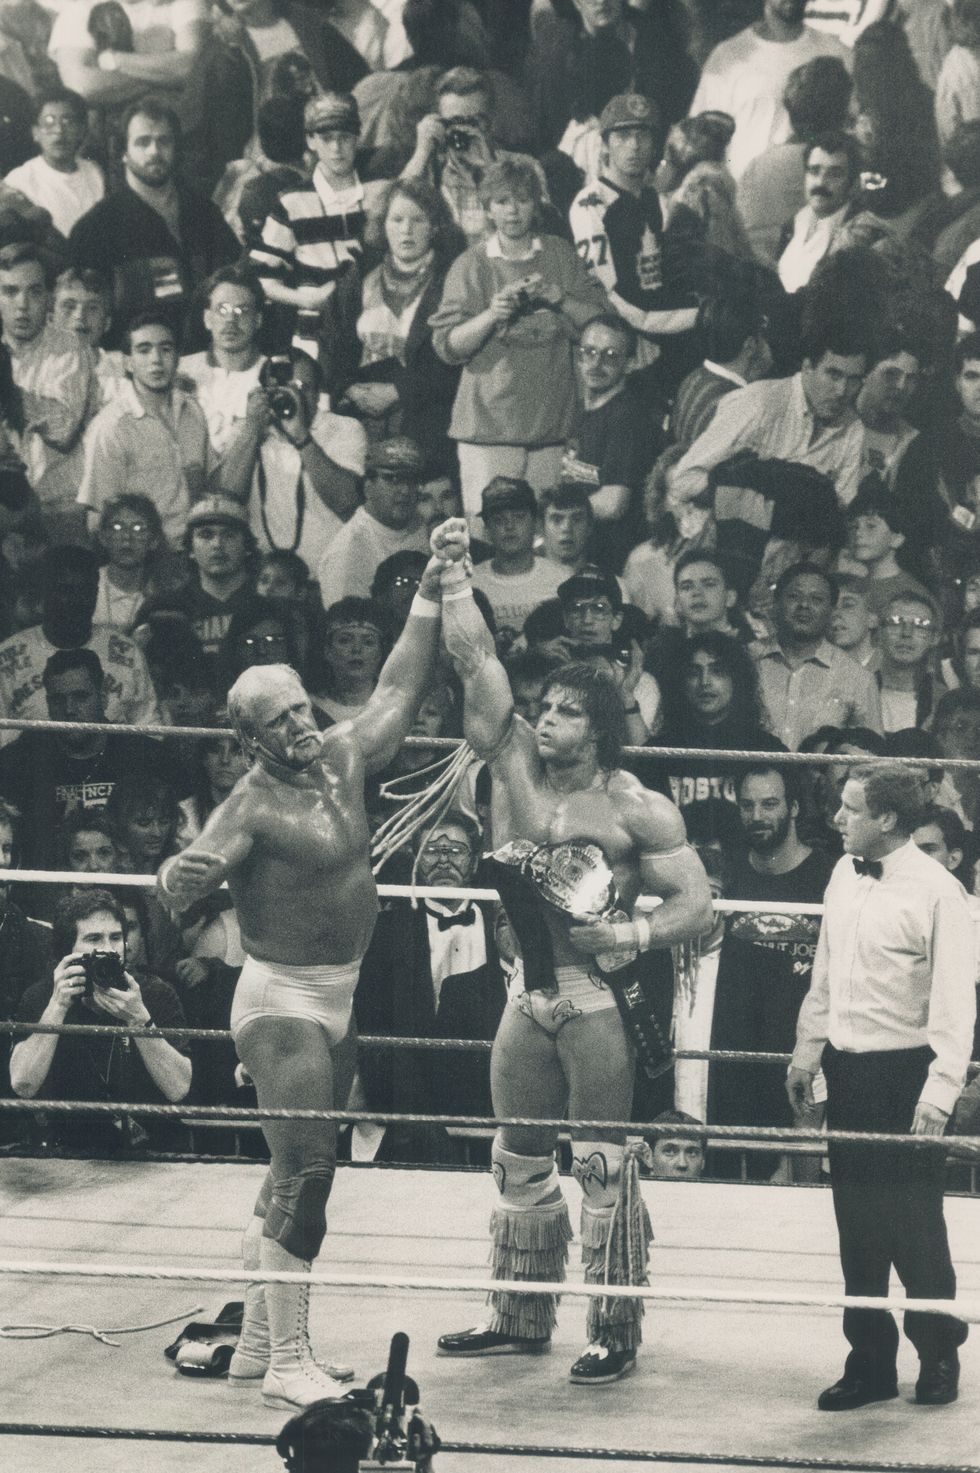 Hulk Hogan hoists the hand Ultimate Warrior